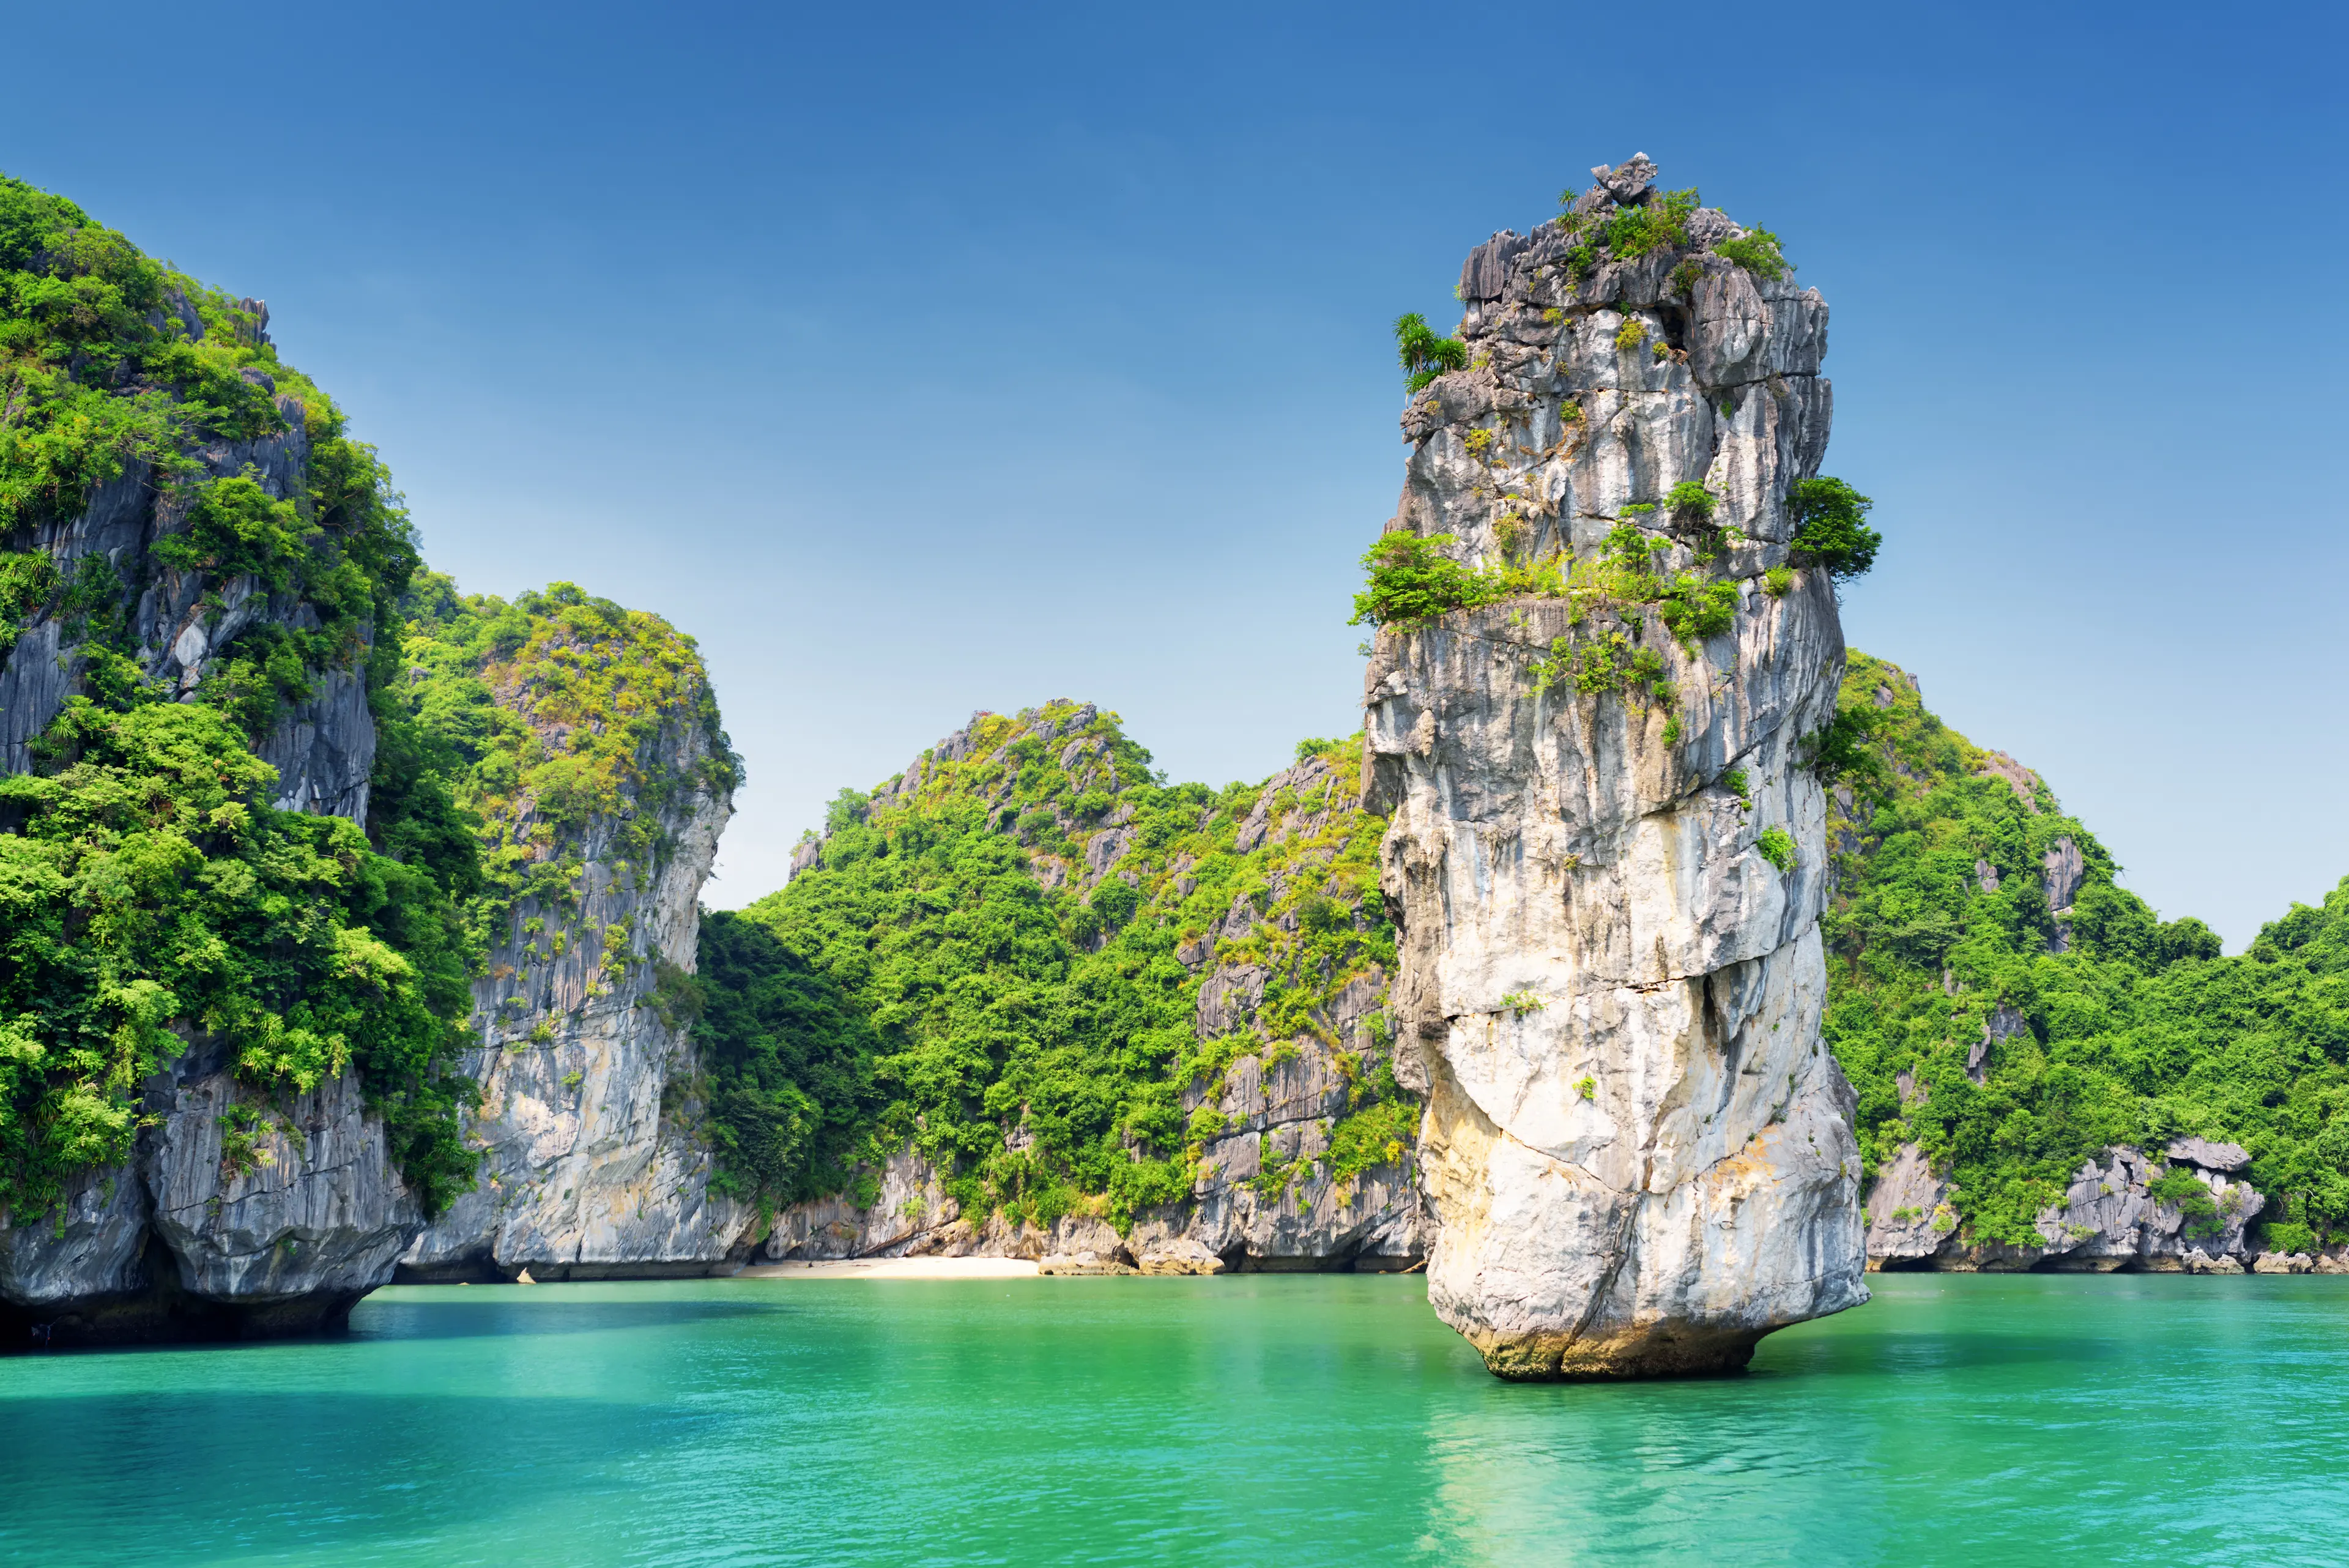 4-Day Adventurous Friends Getaway to Hidden Ha Long Bay